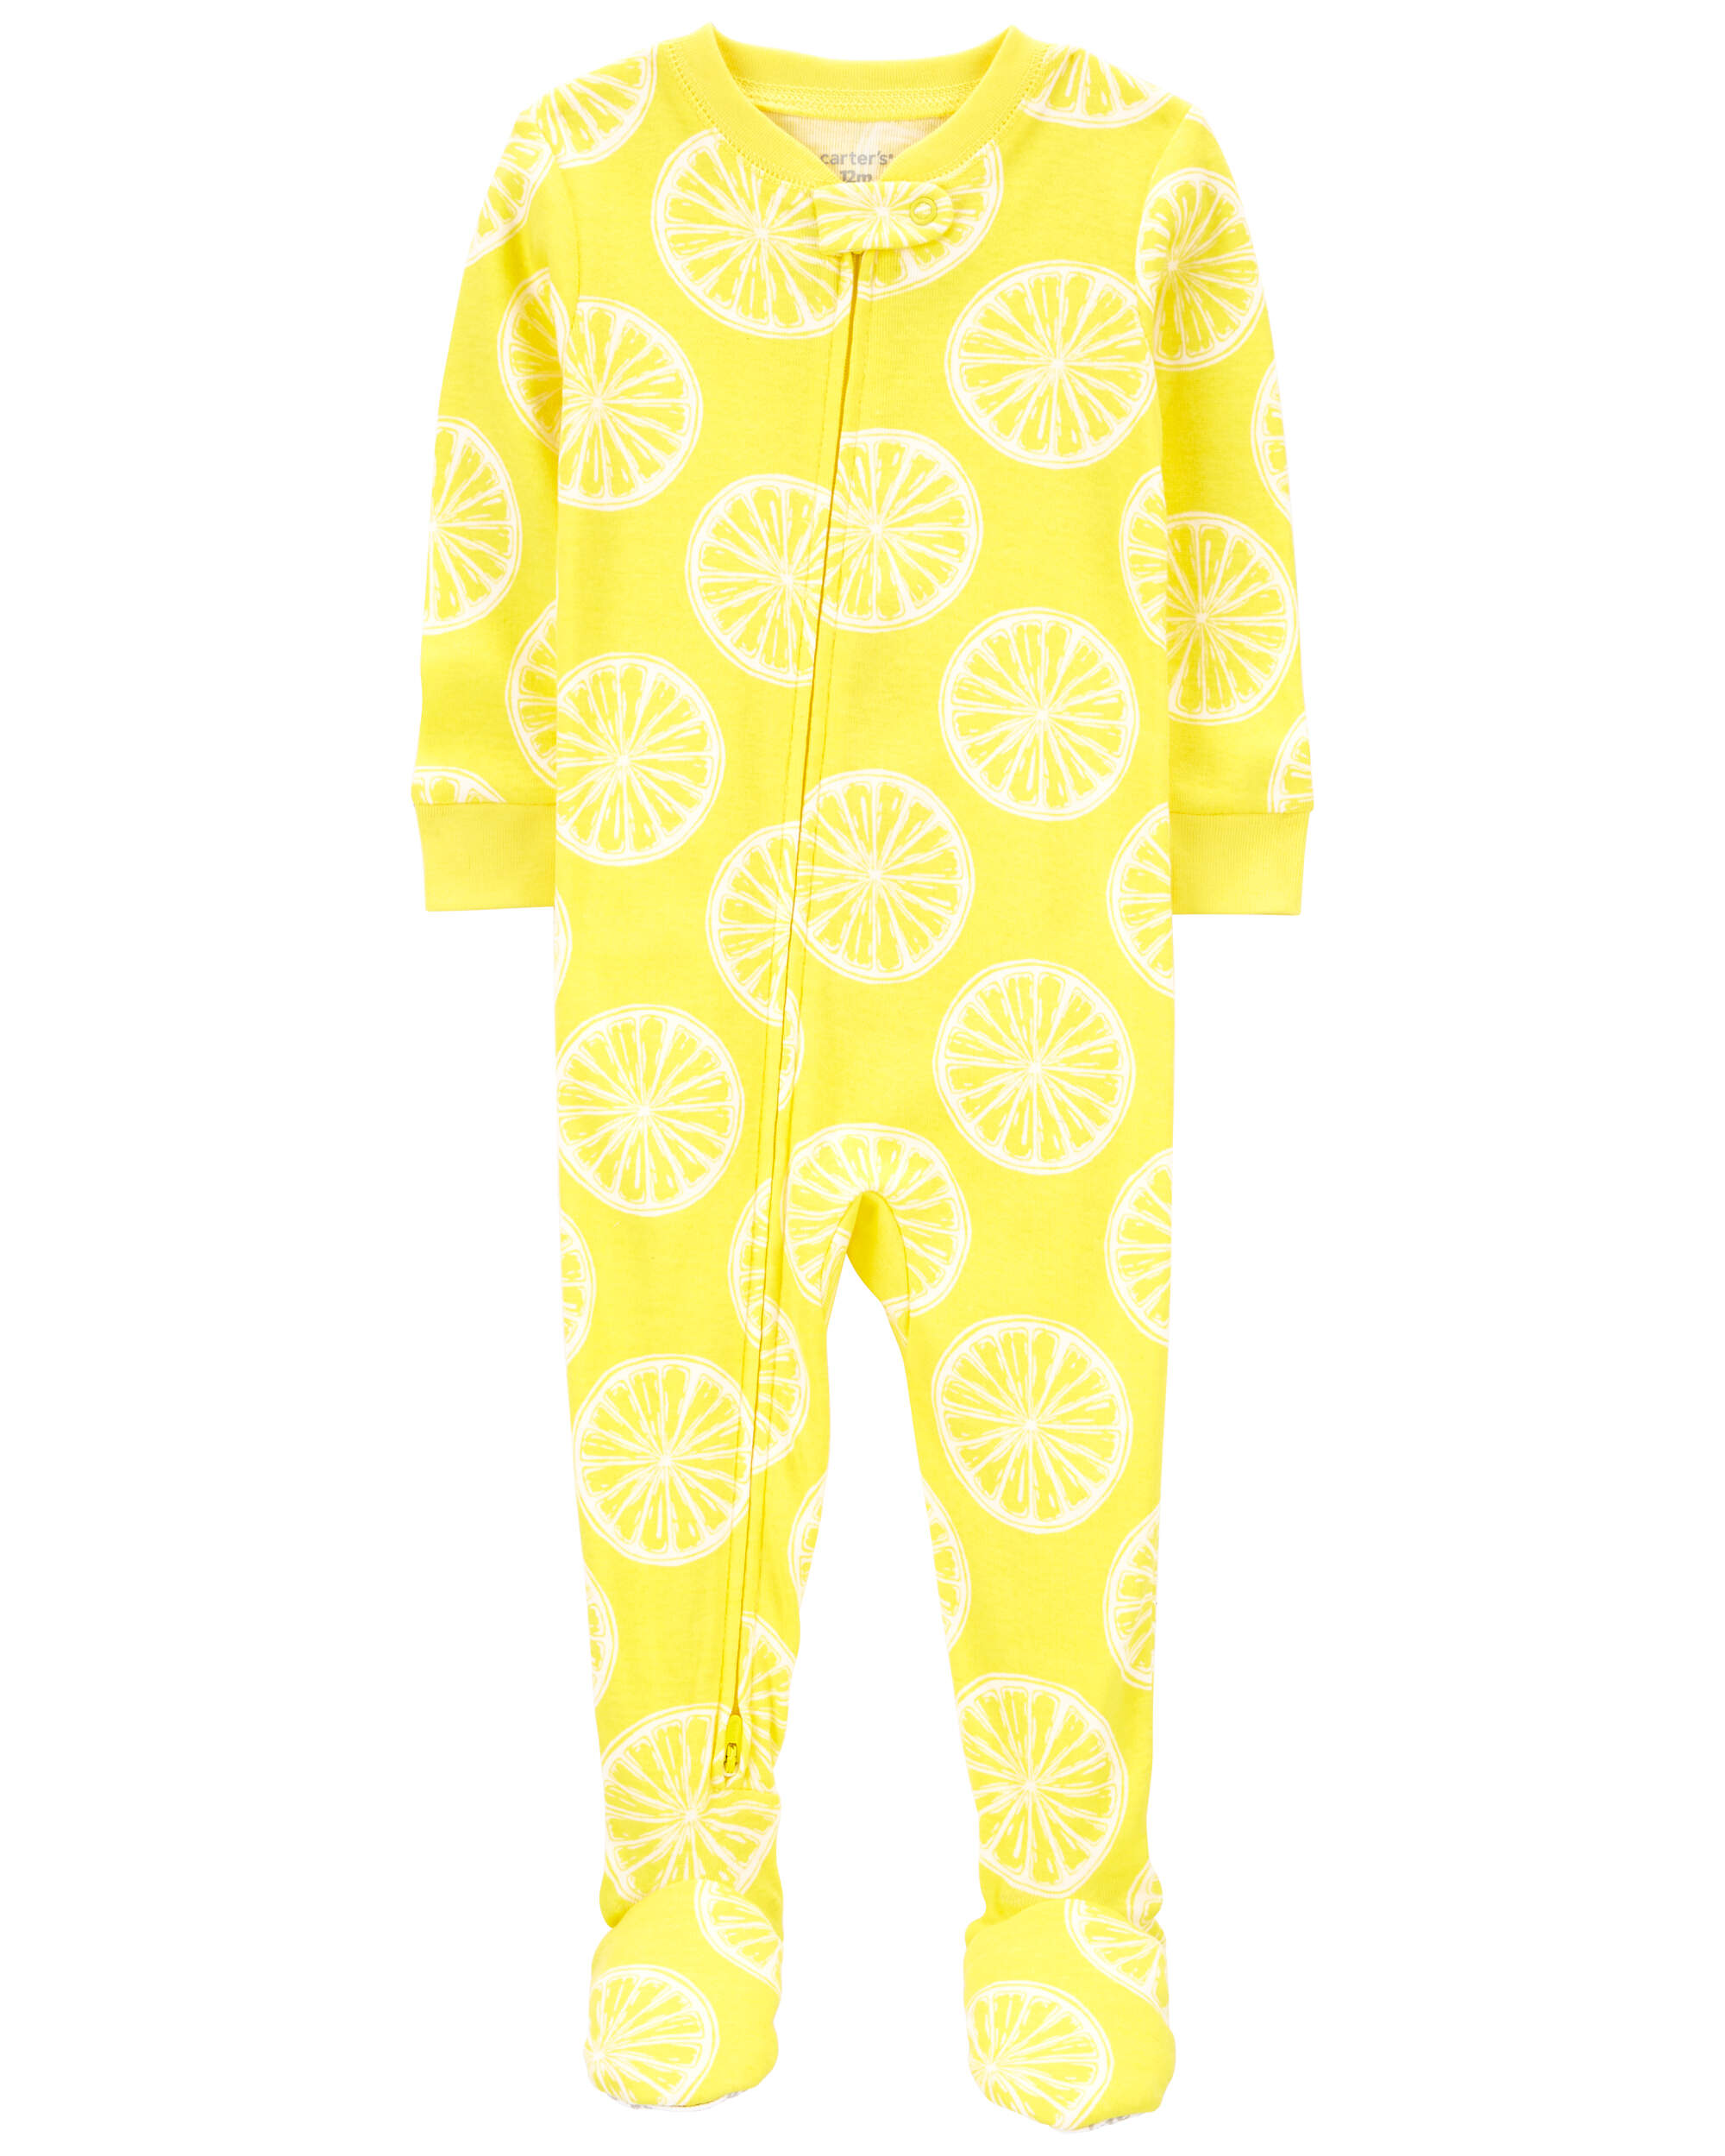 Toddler 1-Piece Lemon 100% Snug Fit Cotton Footie Pyjamas